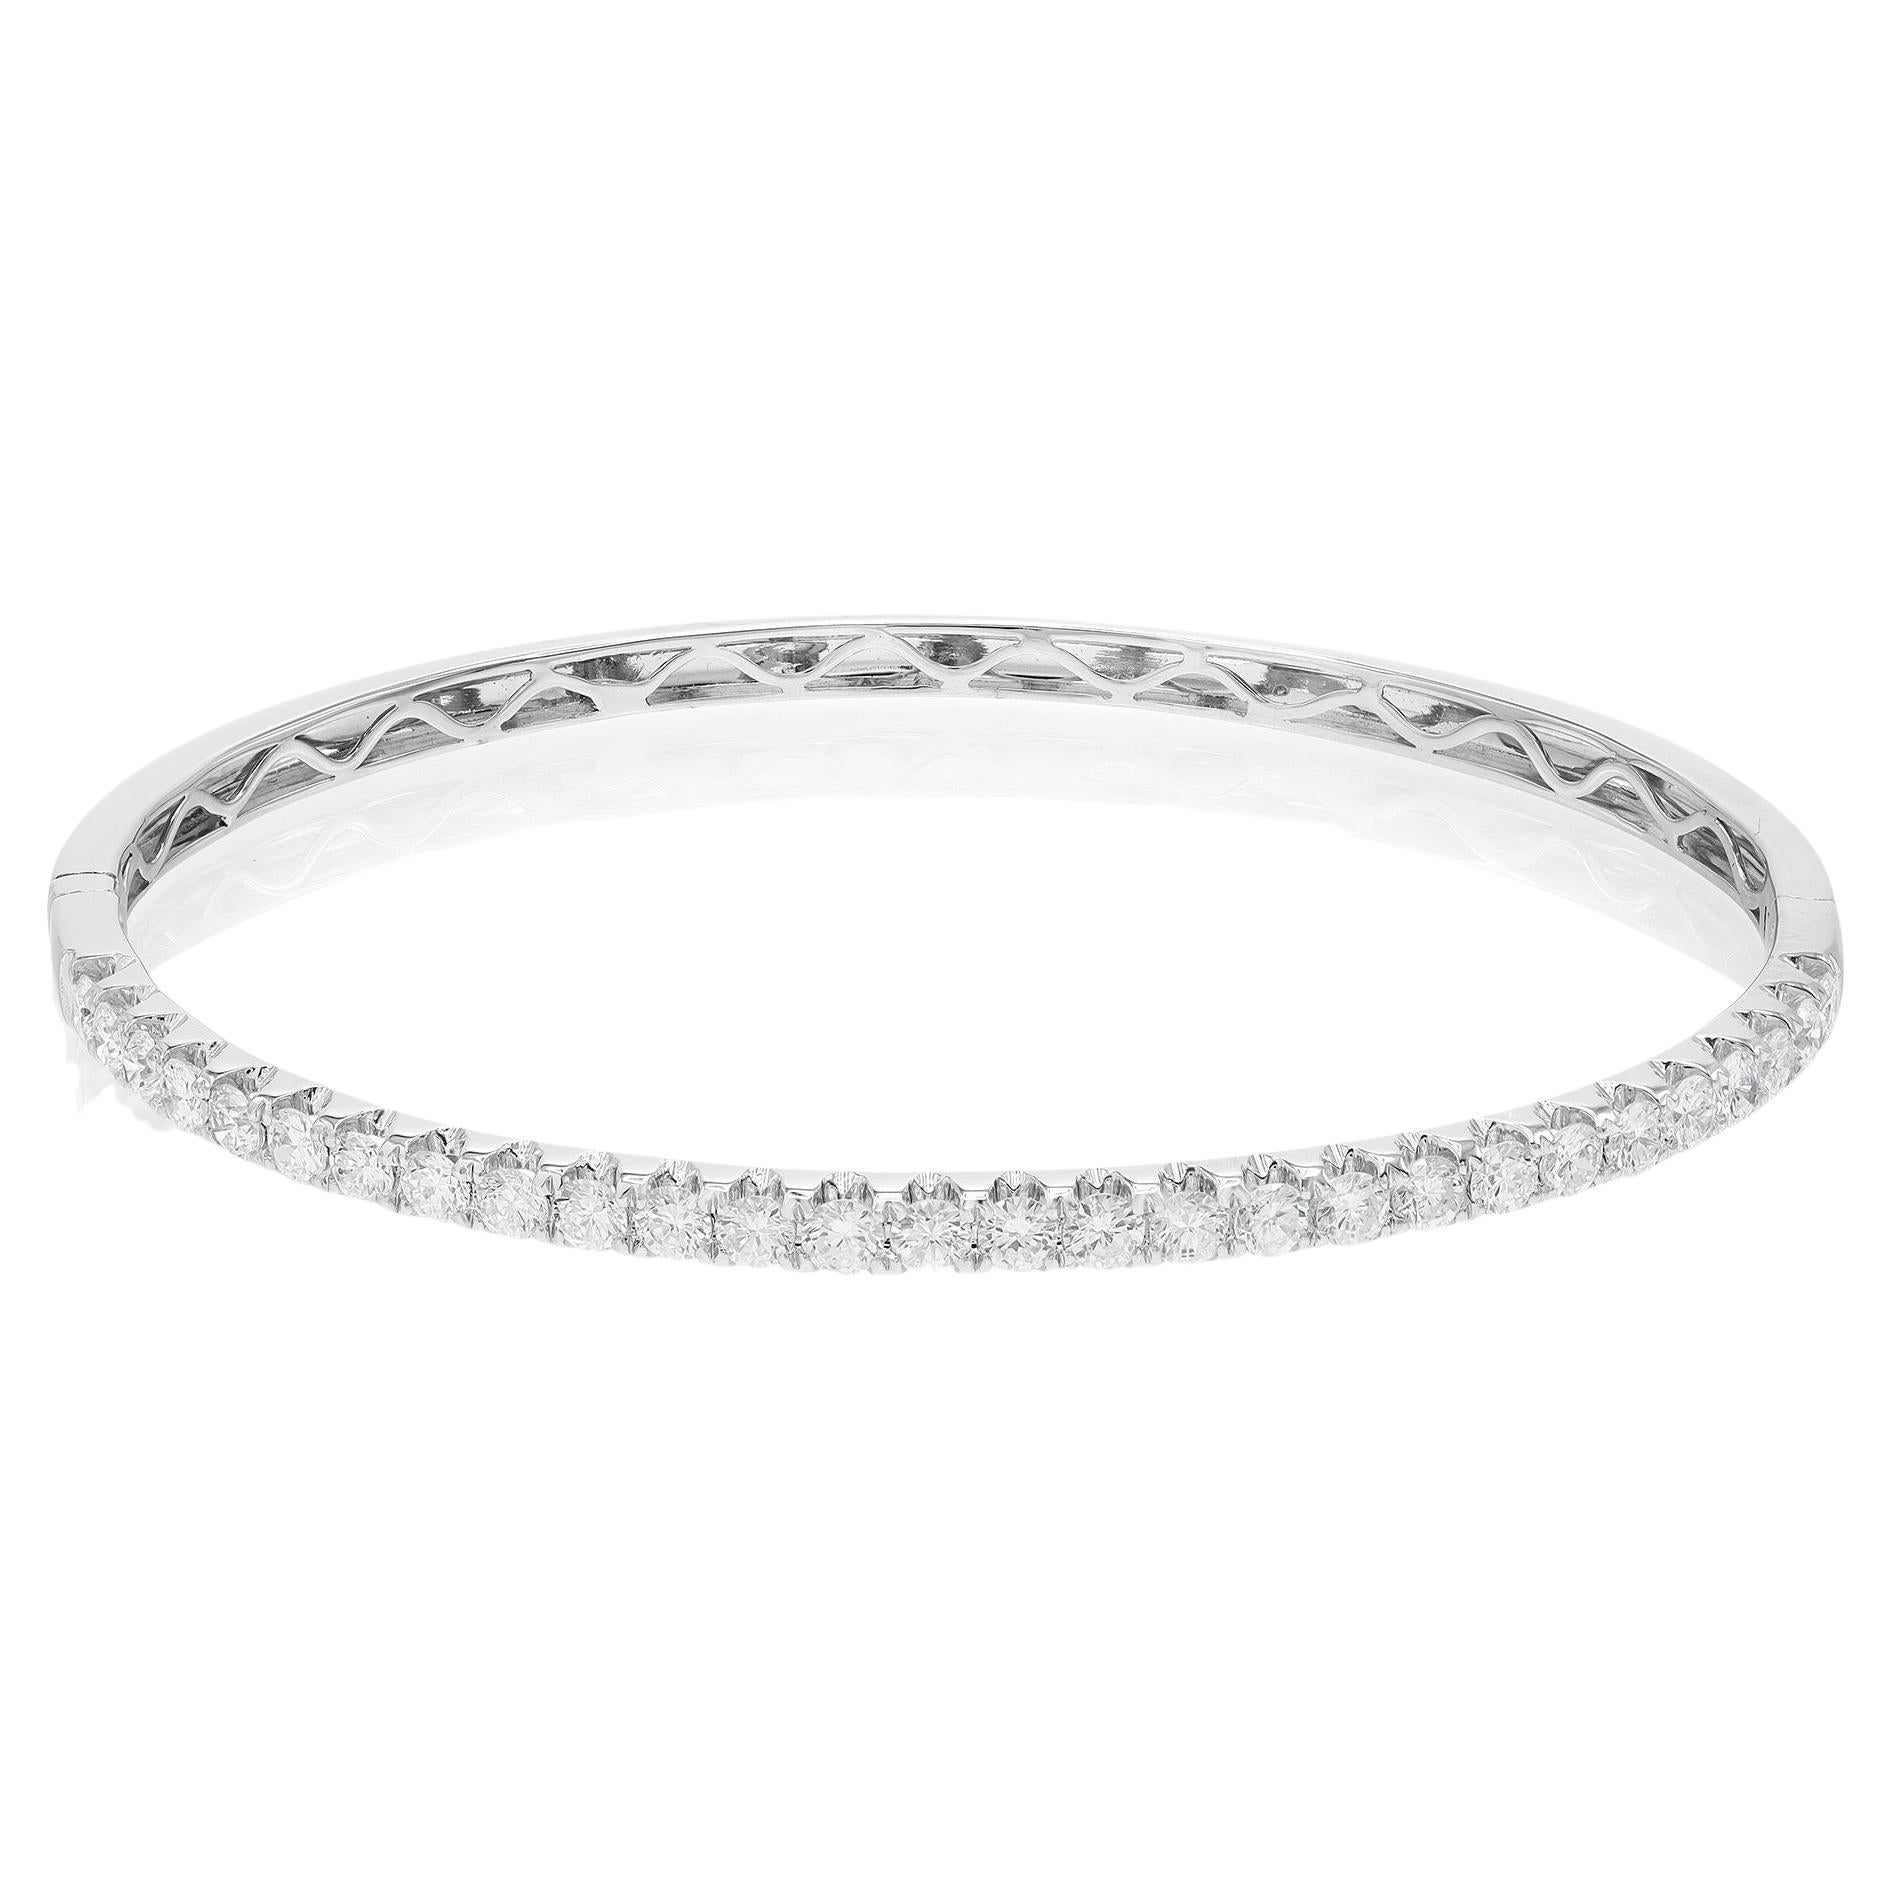 Rachel Koen Round Cut Diamond Bangle Bracelet 18K White Gold 2.00Cttw For Sale